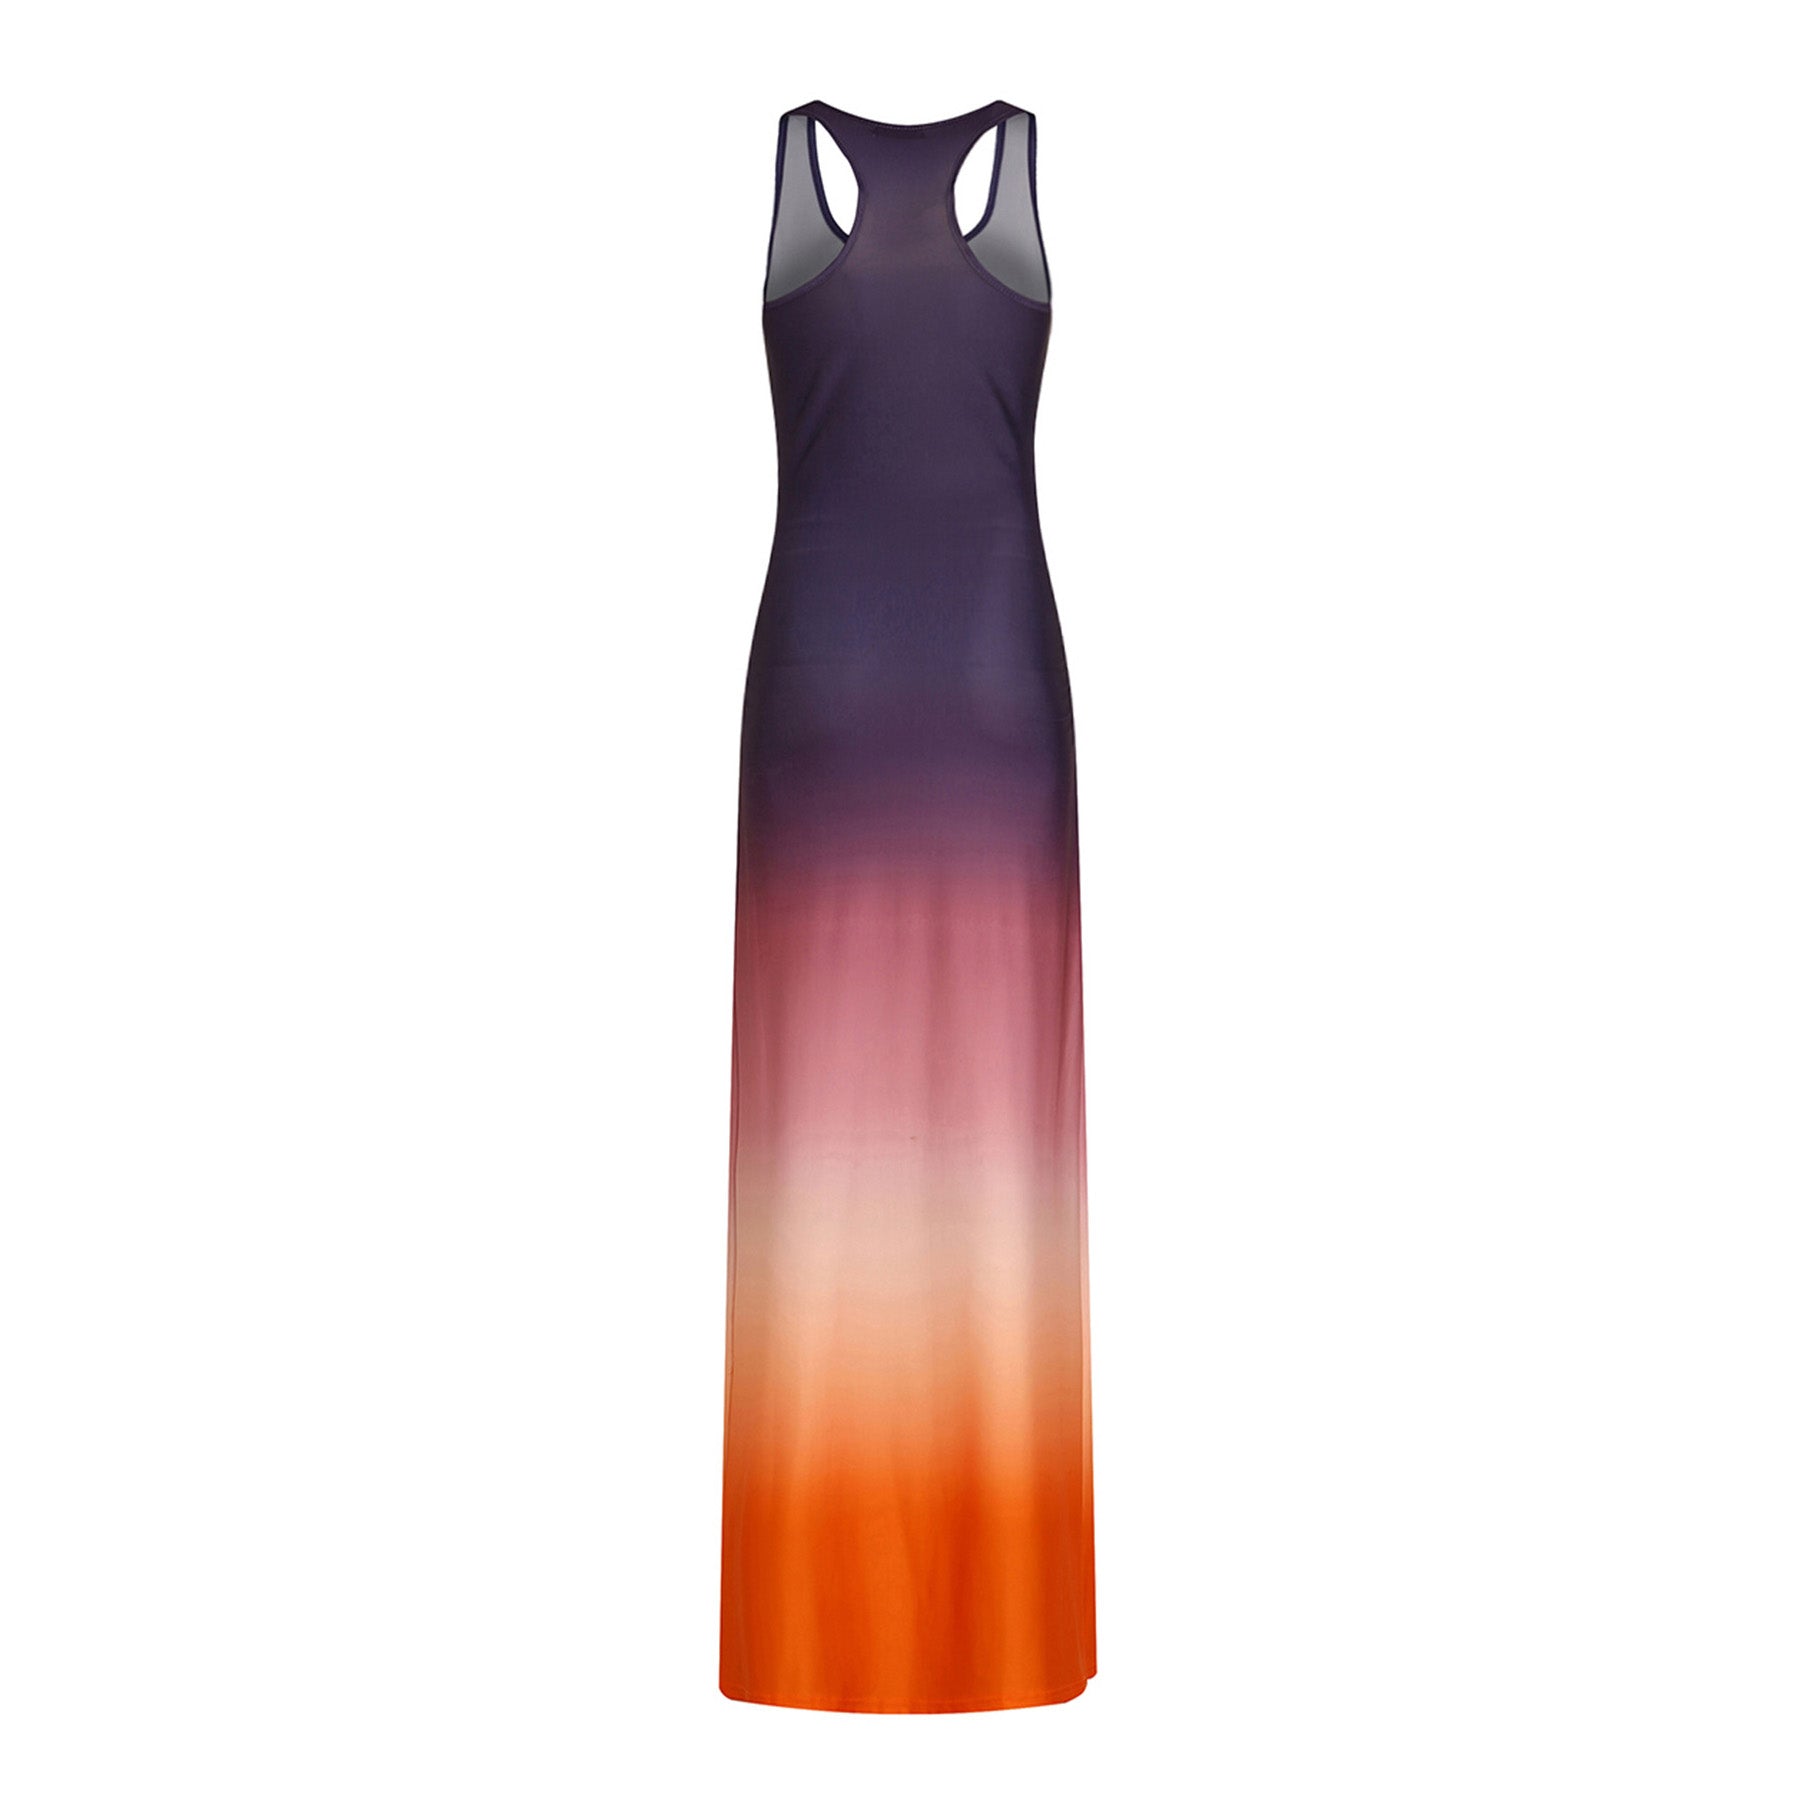 Gradient Color Sleeveless O Neck Floor Length Dress